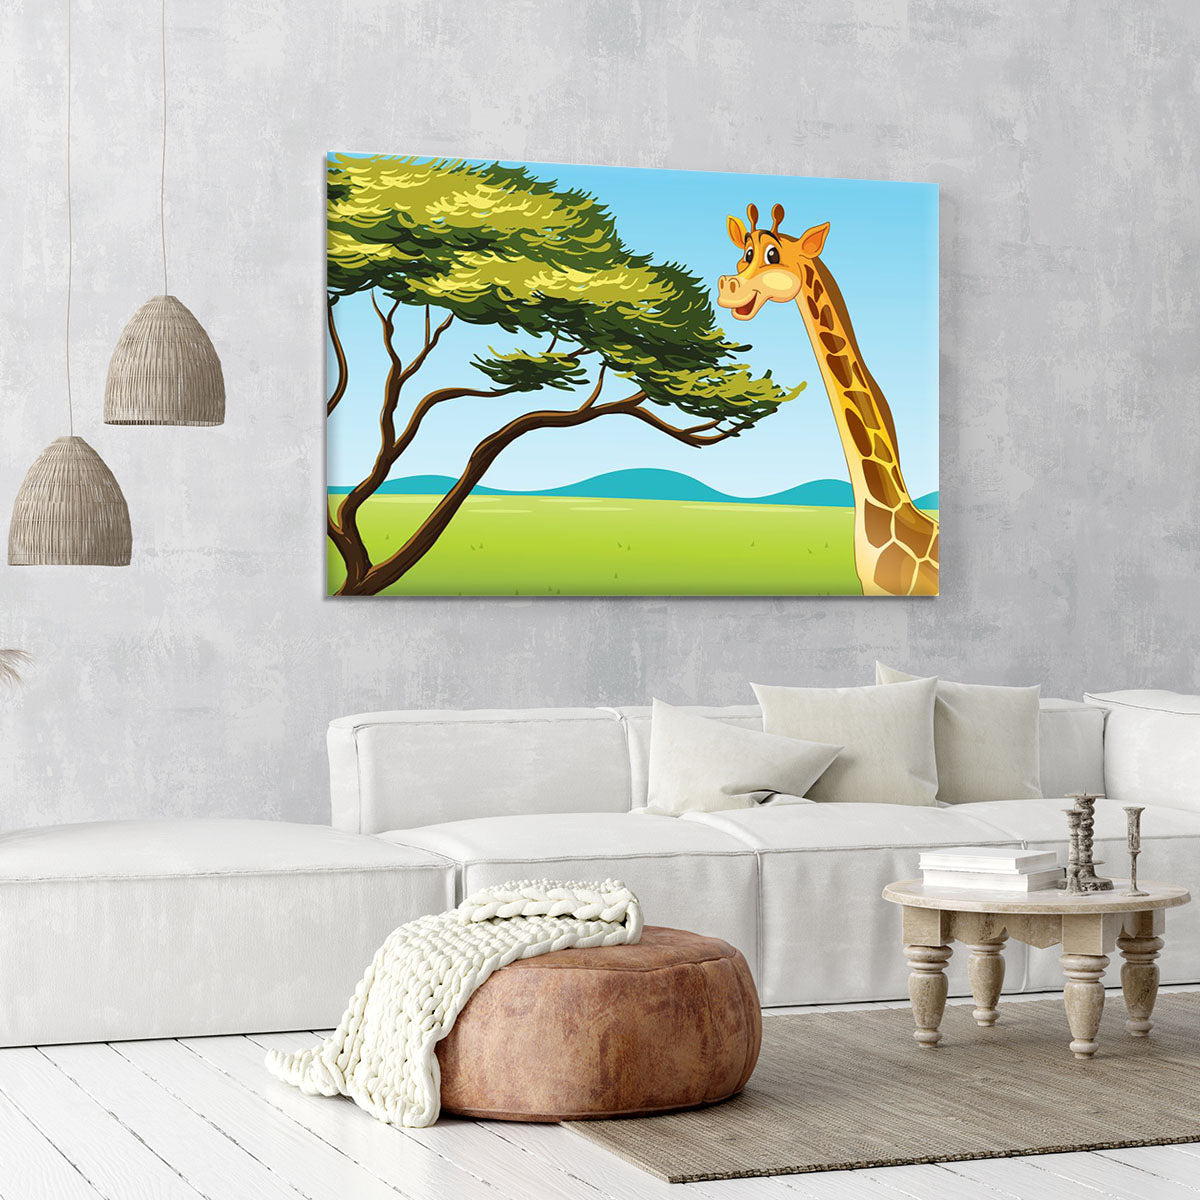 Illustration of a giraffe eating Canvas Print or Poster - Canvas Art Rocks - 6